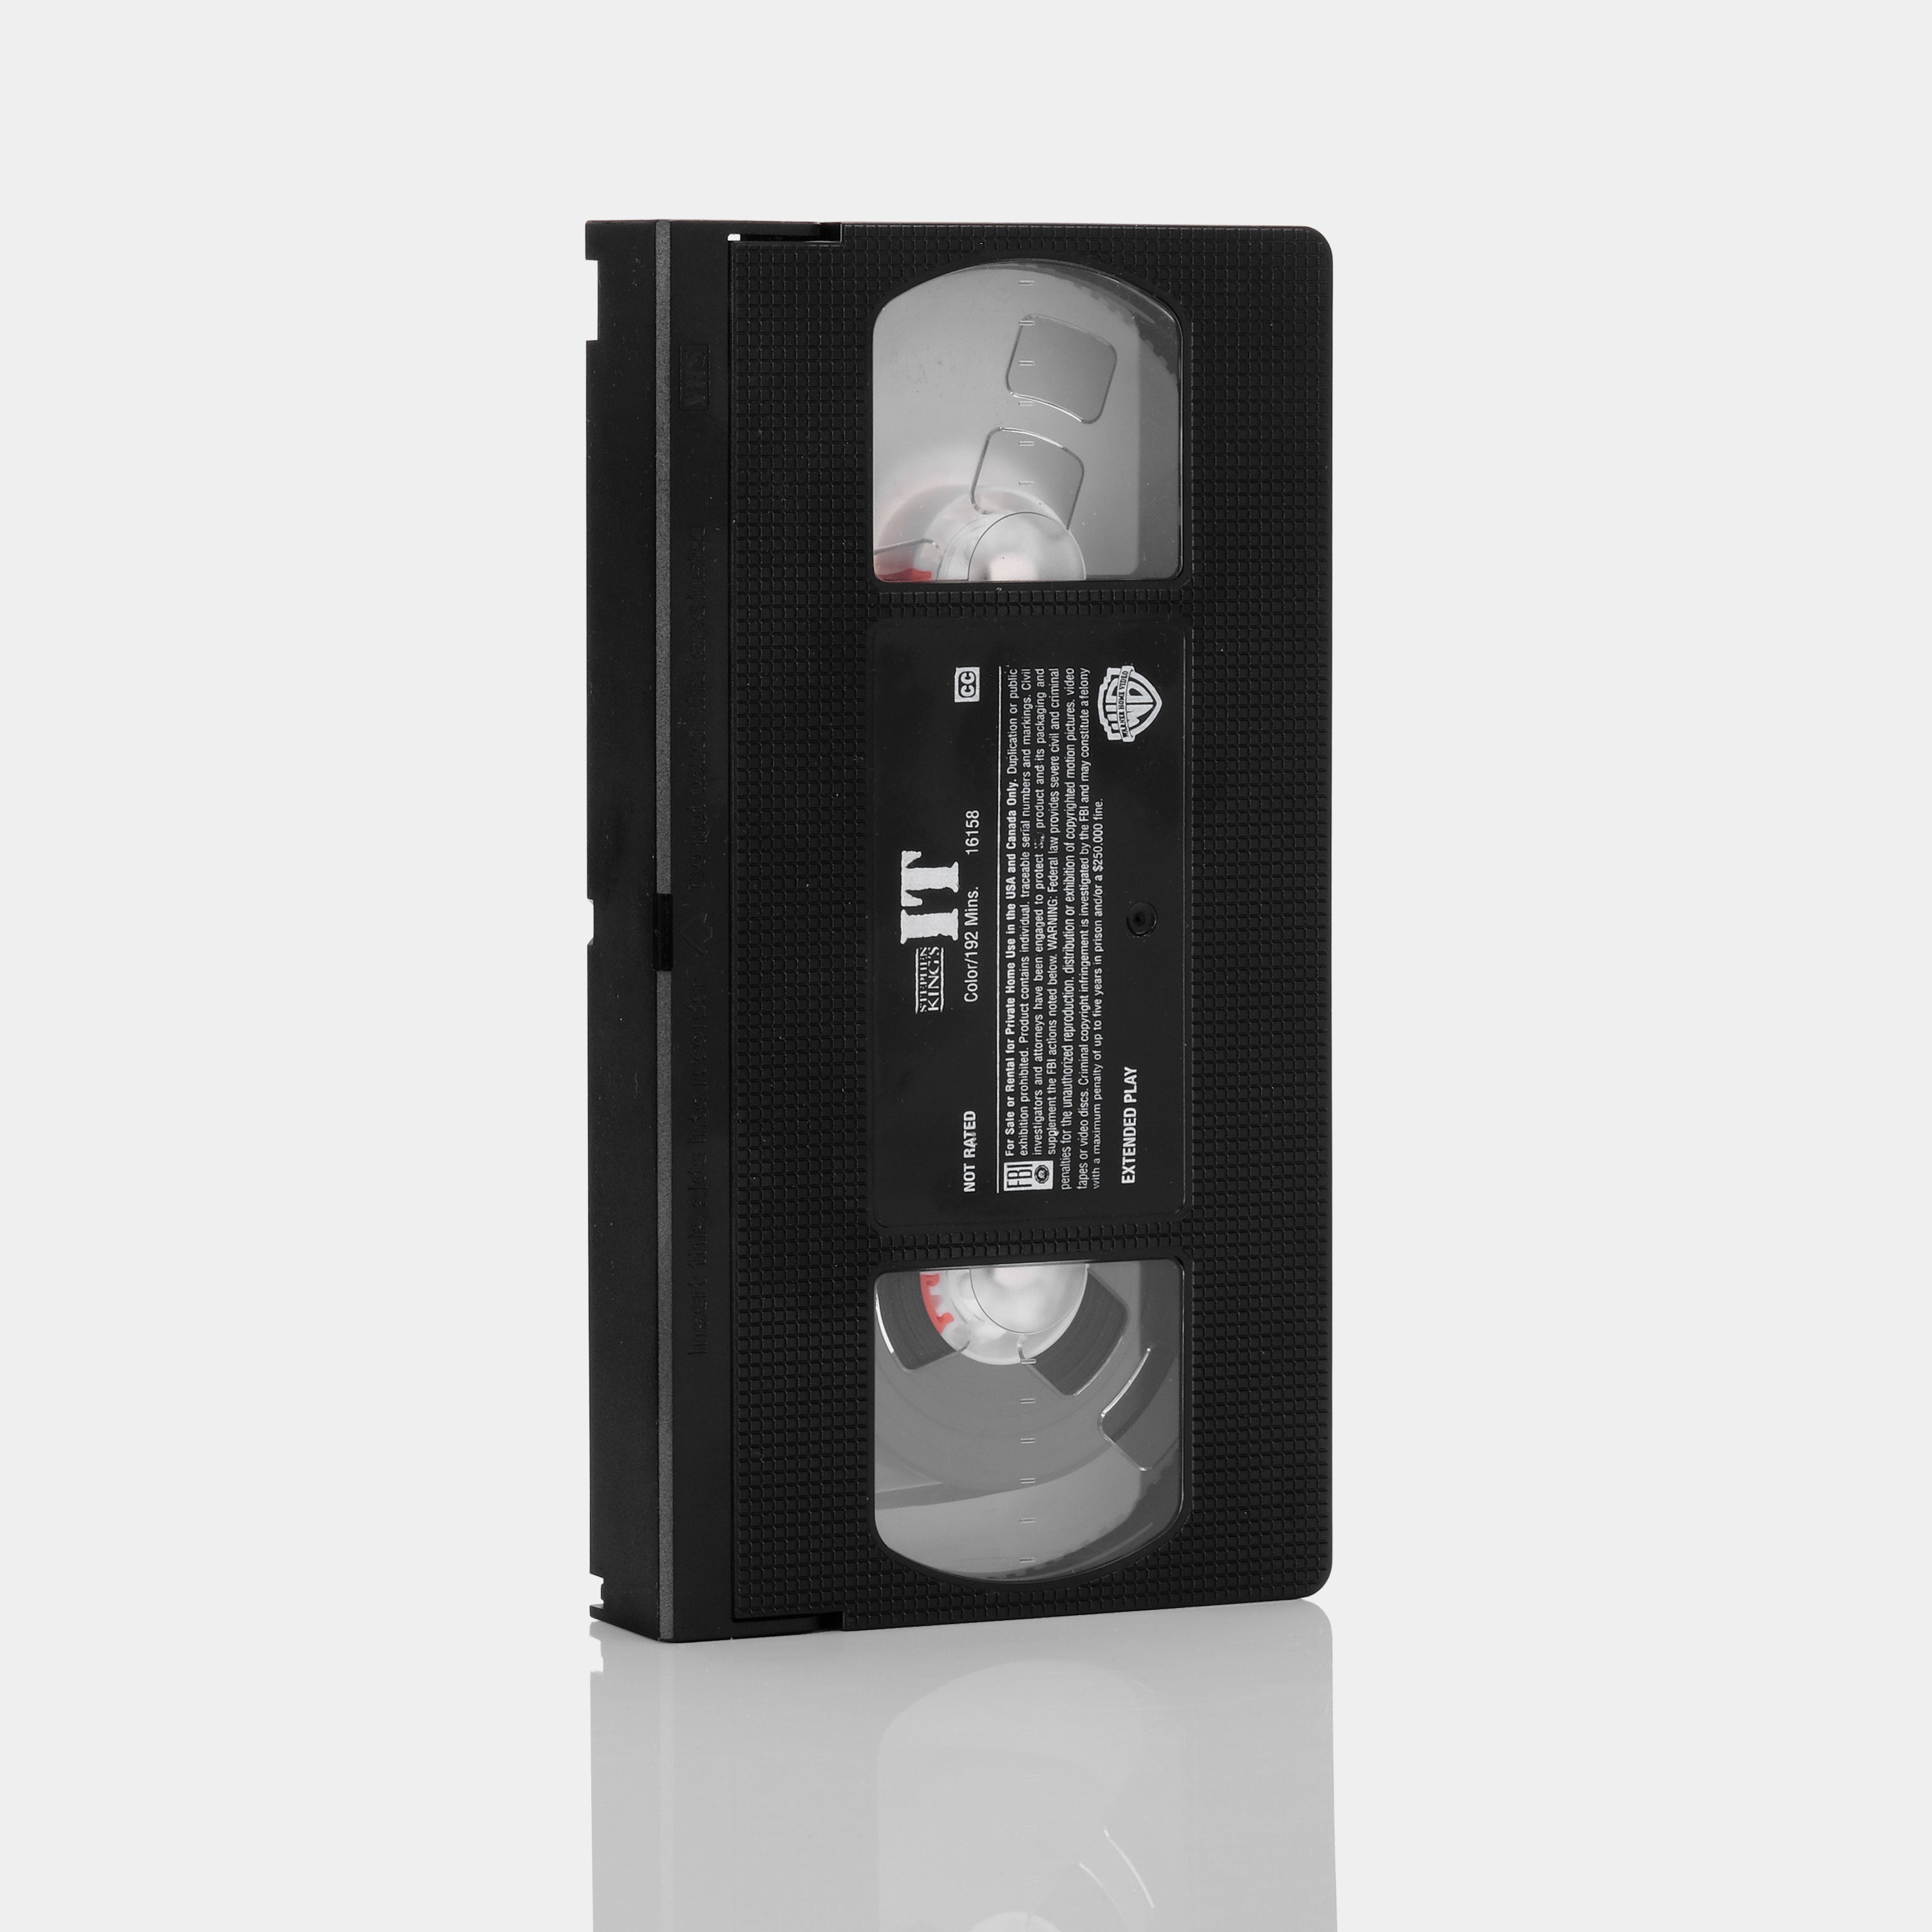 It VHS Tape